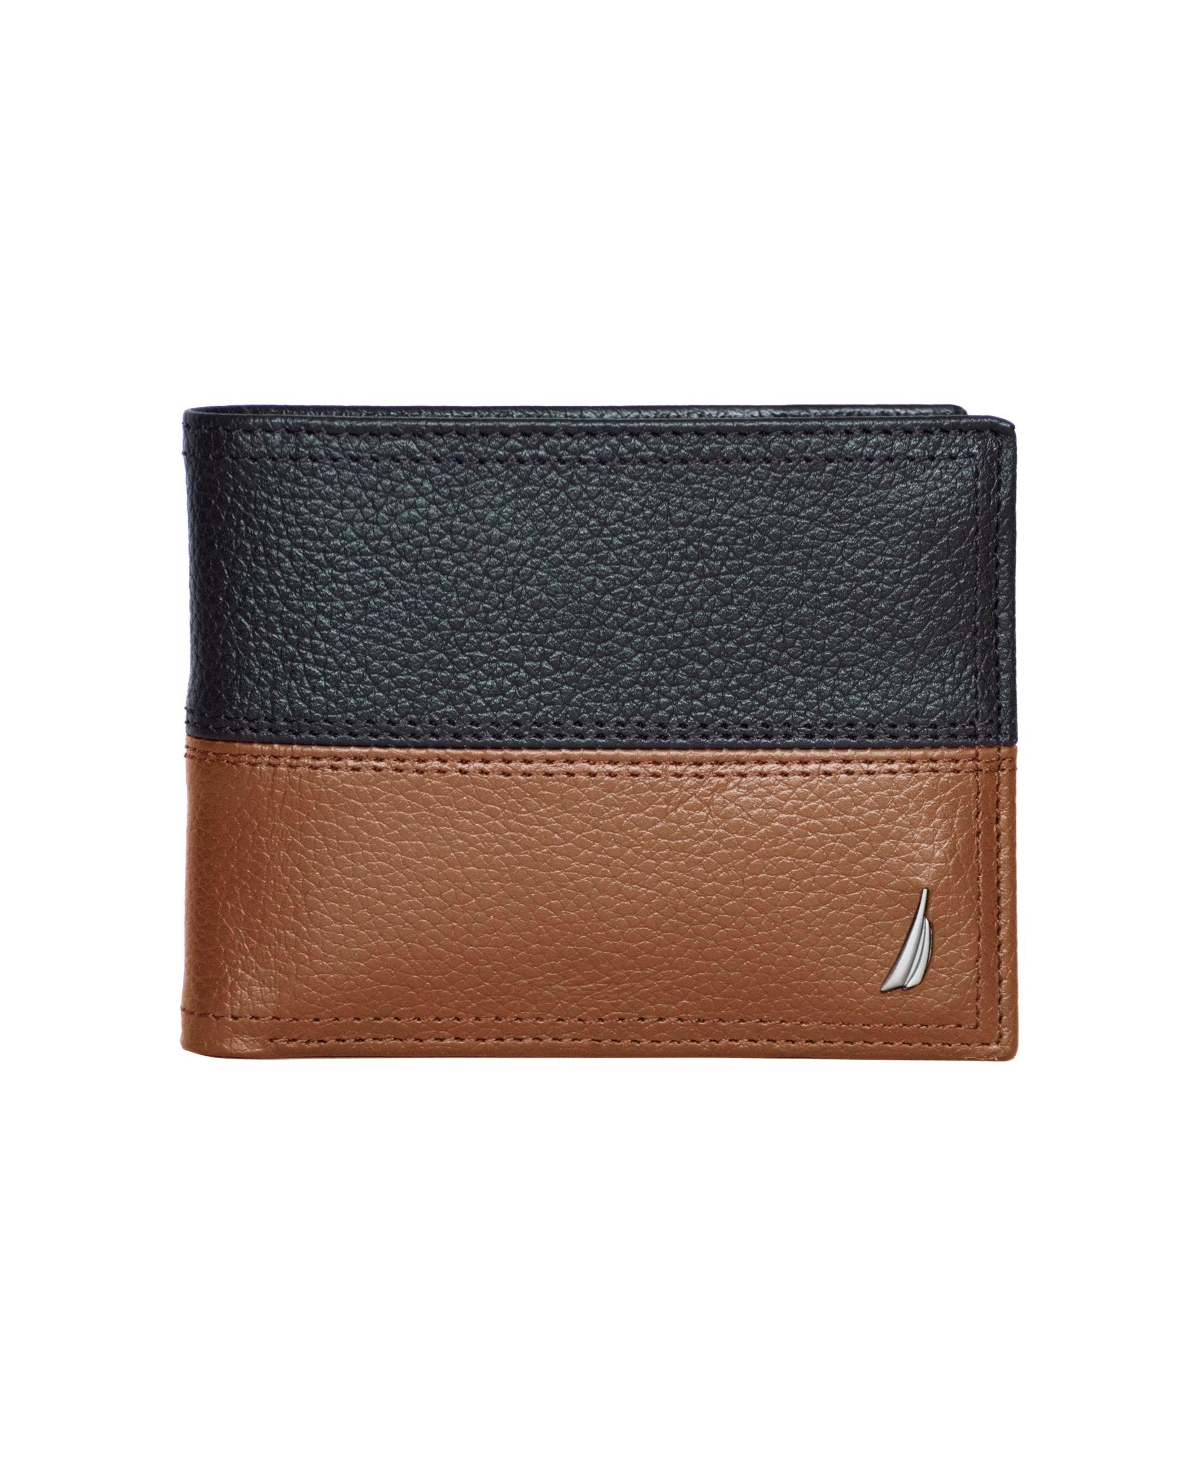 Men's Bifold Leather Wallet - Black, Gray